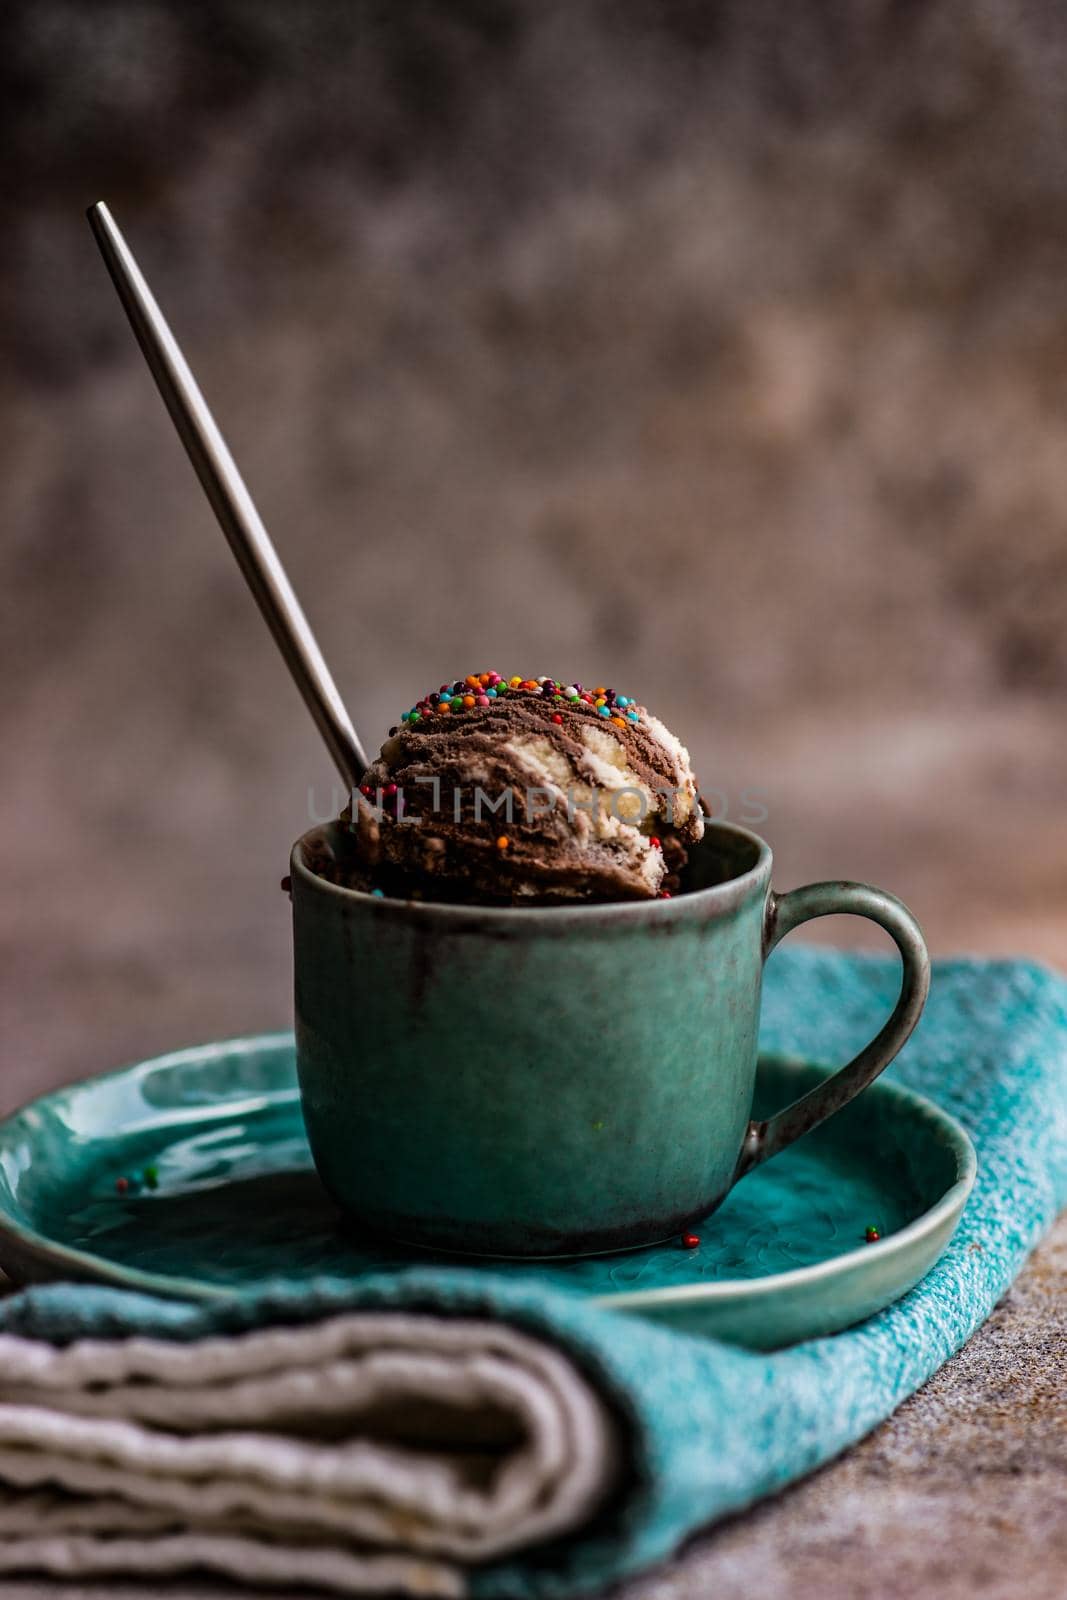 Sweet homemade chocolate ice cream by Elet